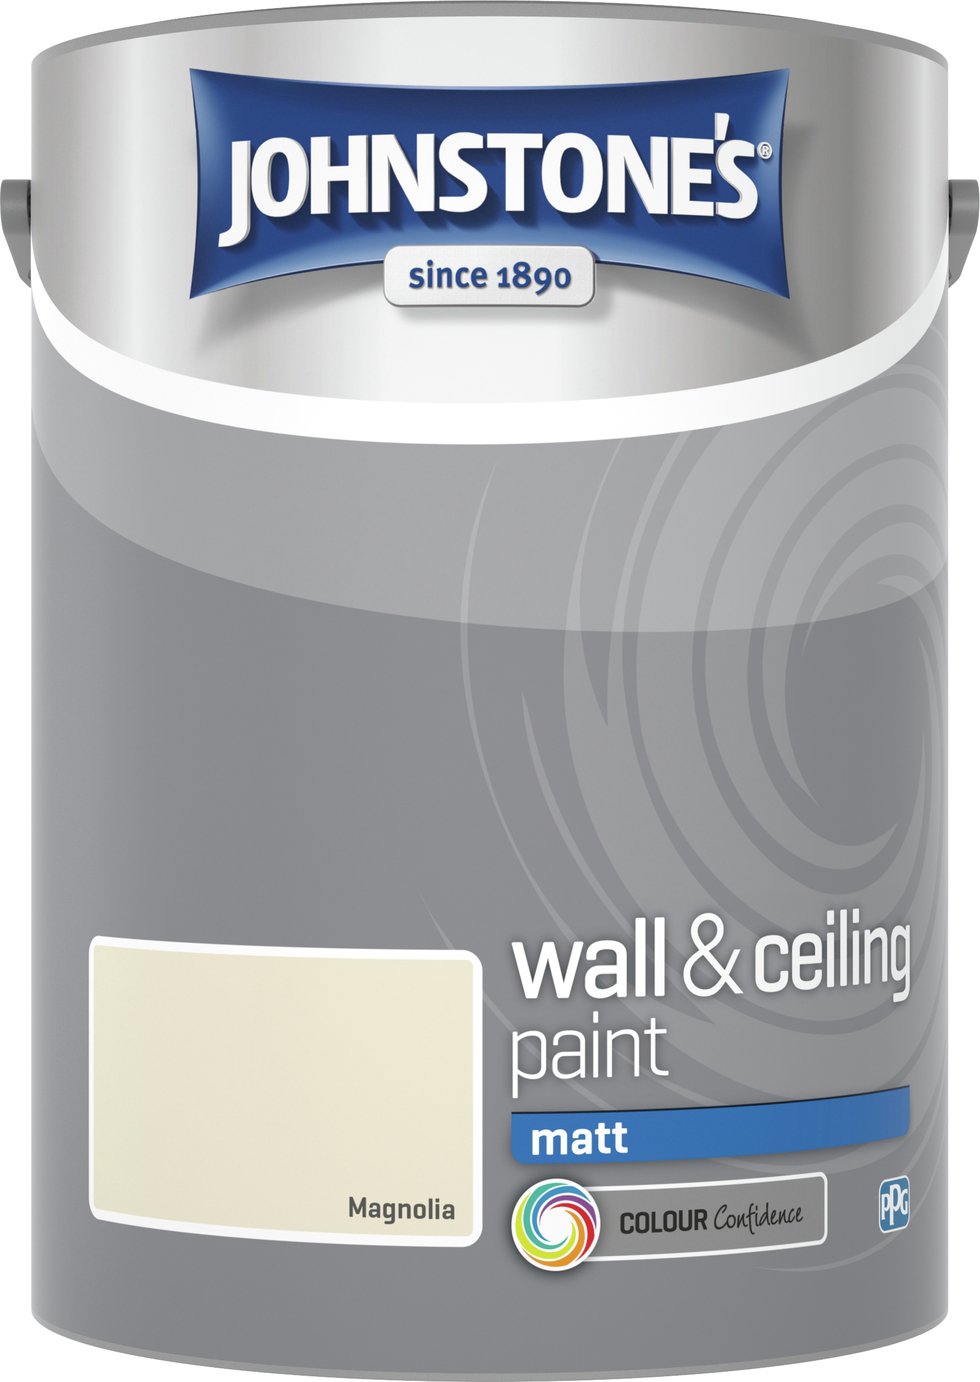 Johnstone's Wall & Ceiling Paint Matt 5L Reviews